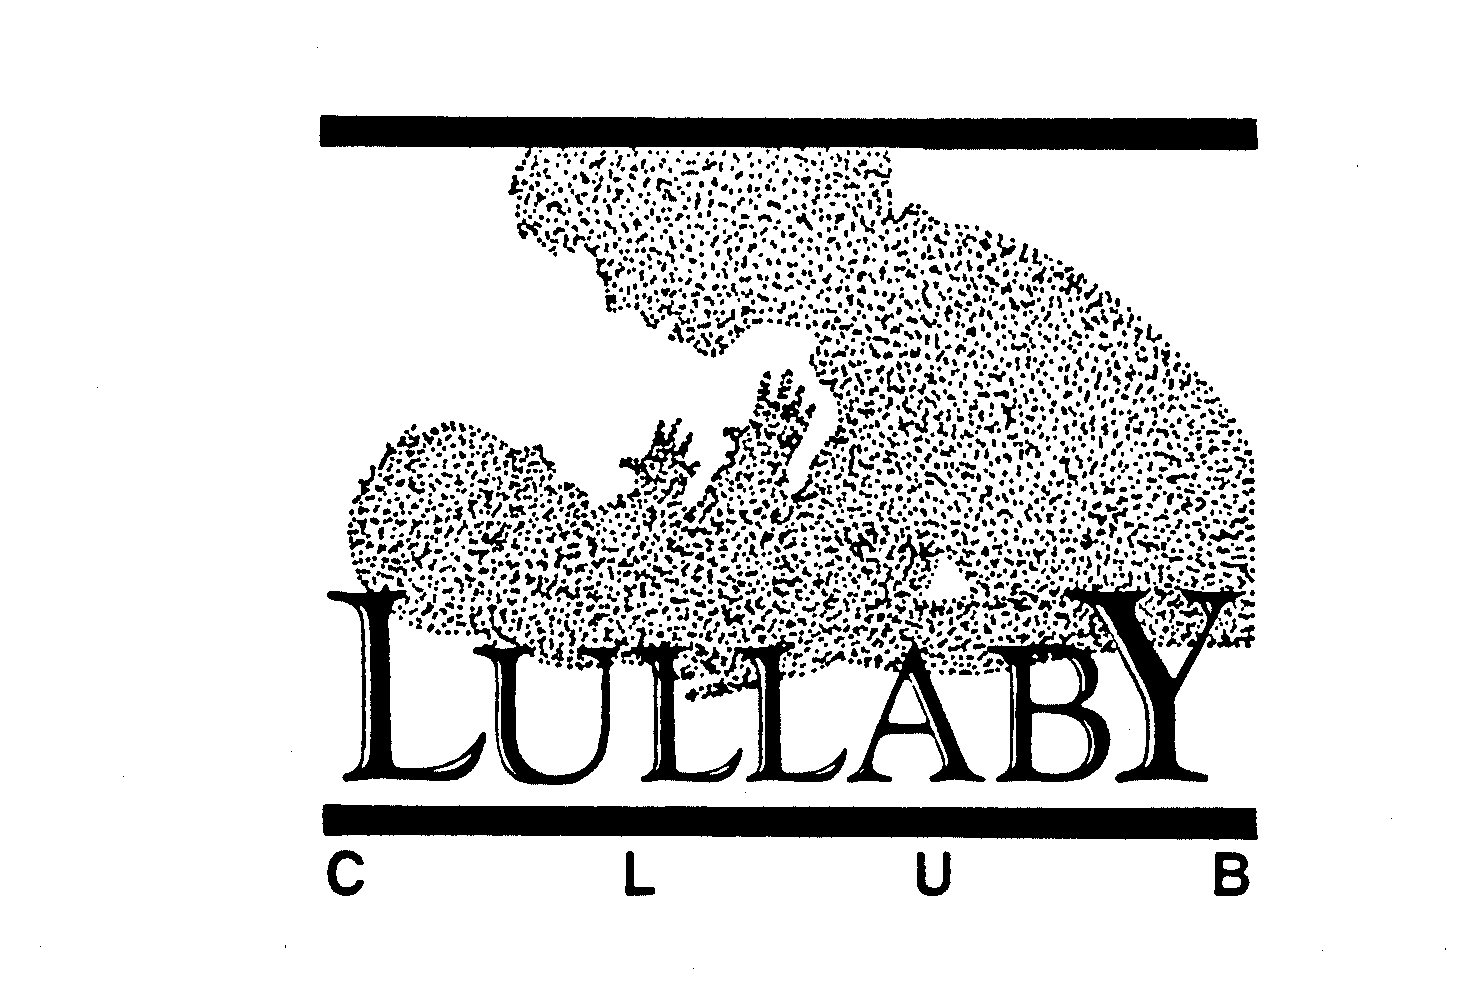 LULLABY CLUB